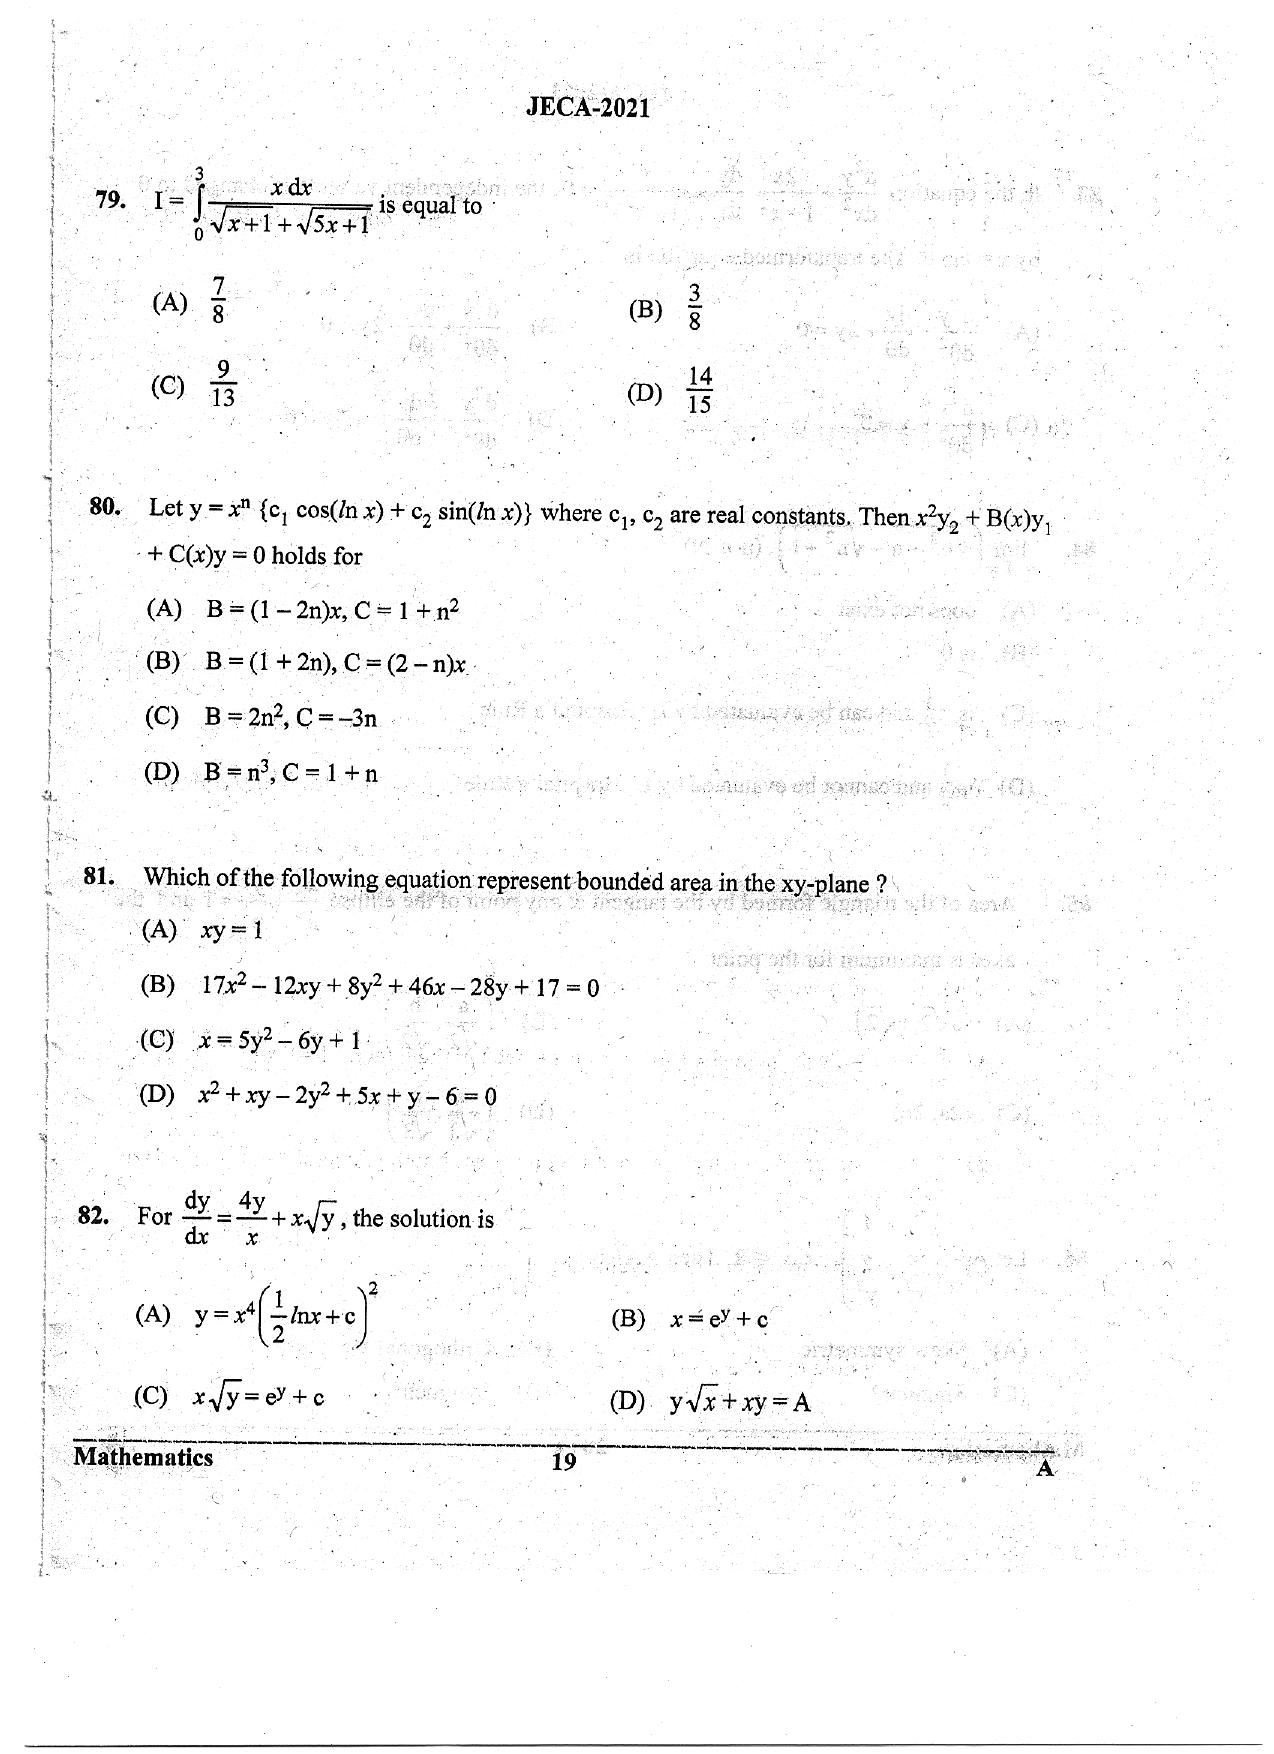 WB JECA 2021 Mathematics Question Paper - Page 19